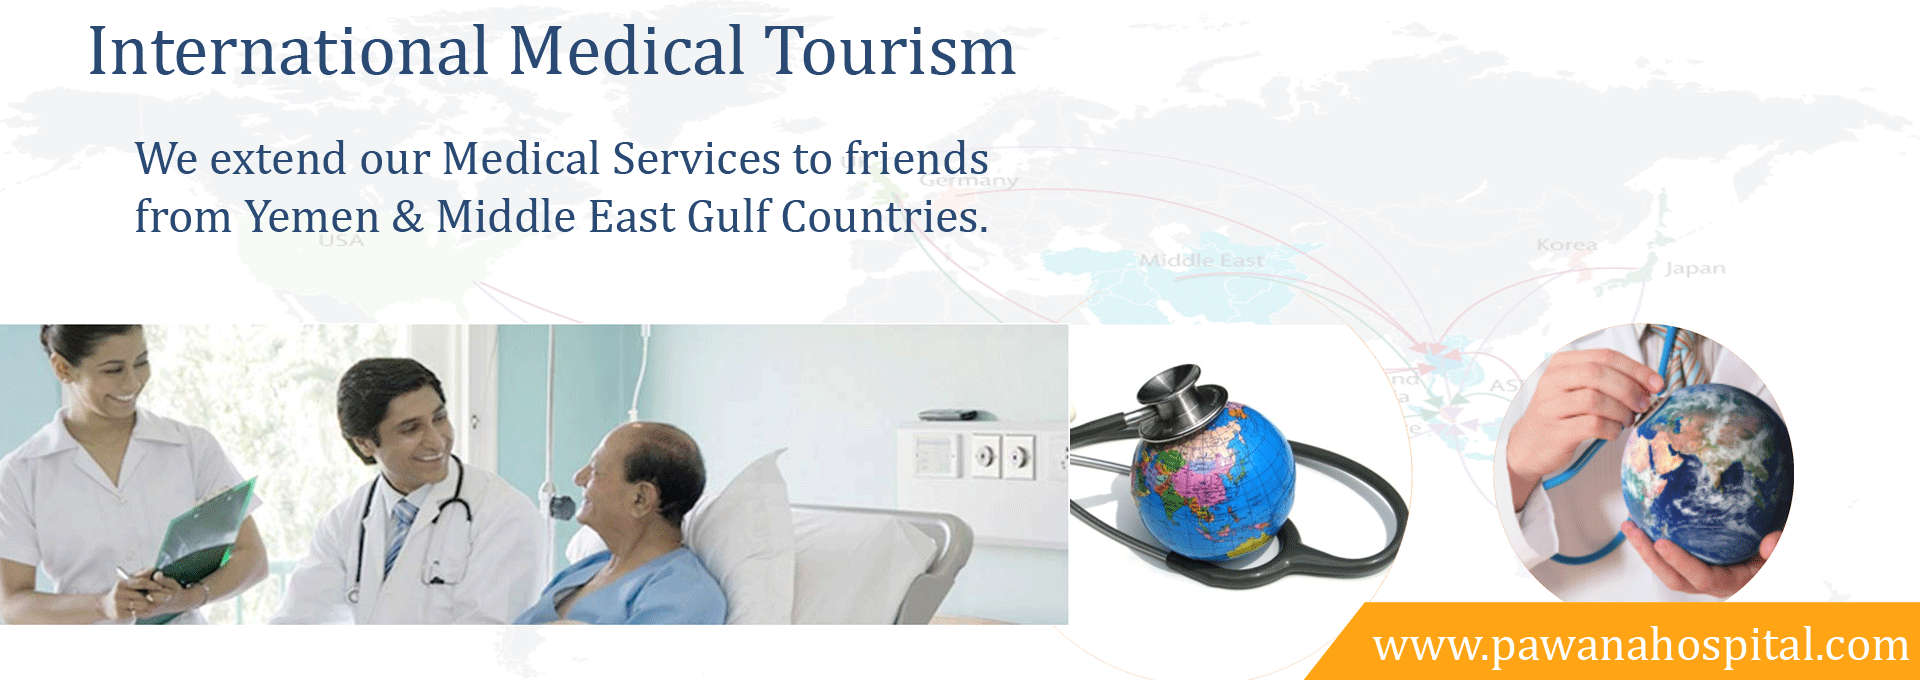  Medical turism services at pawana hospital